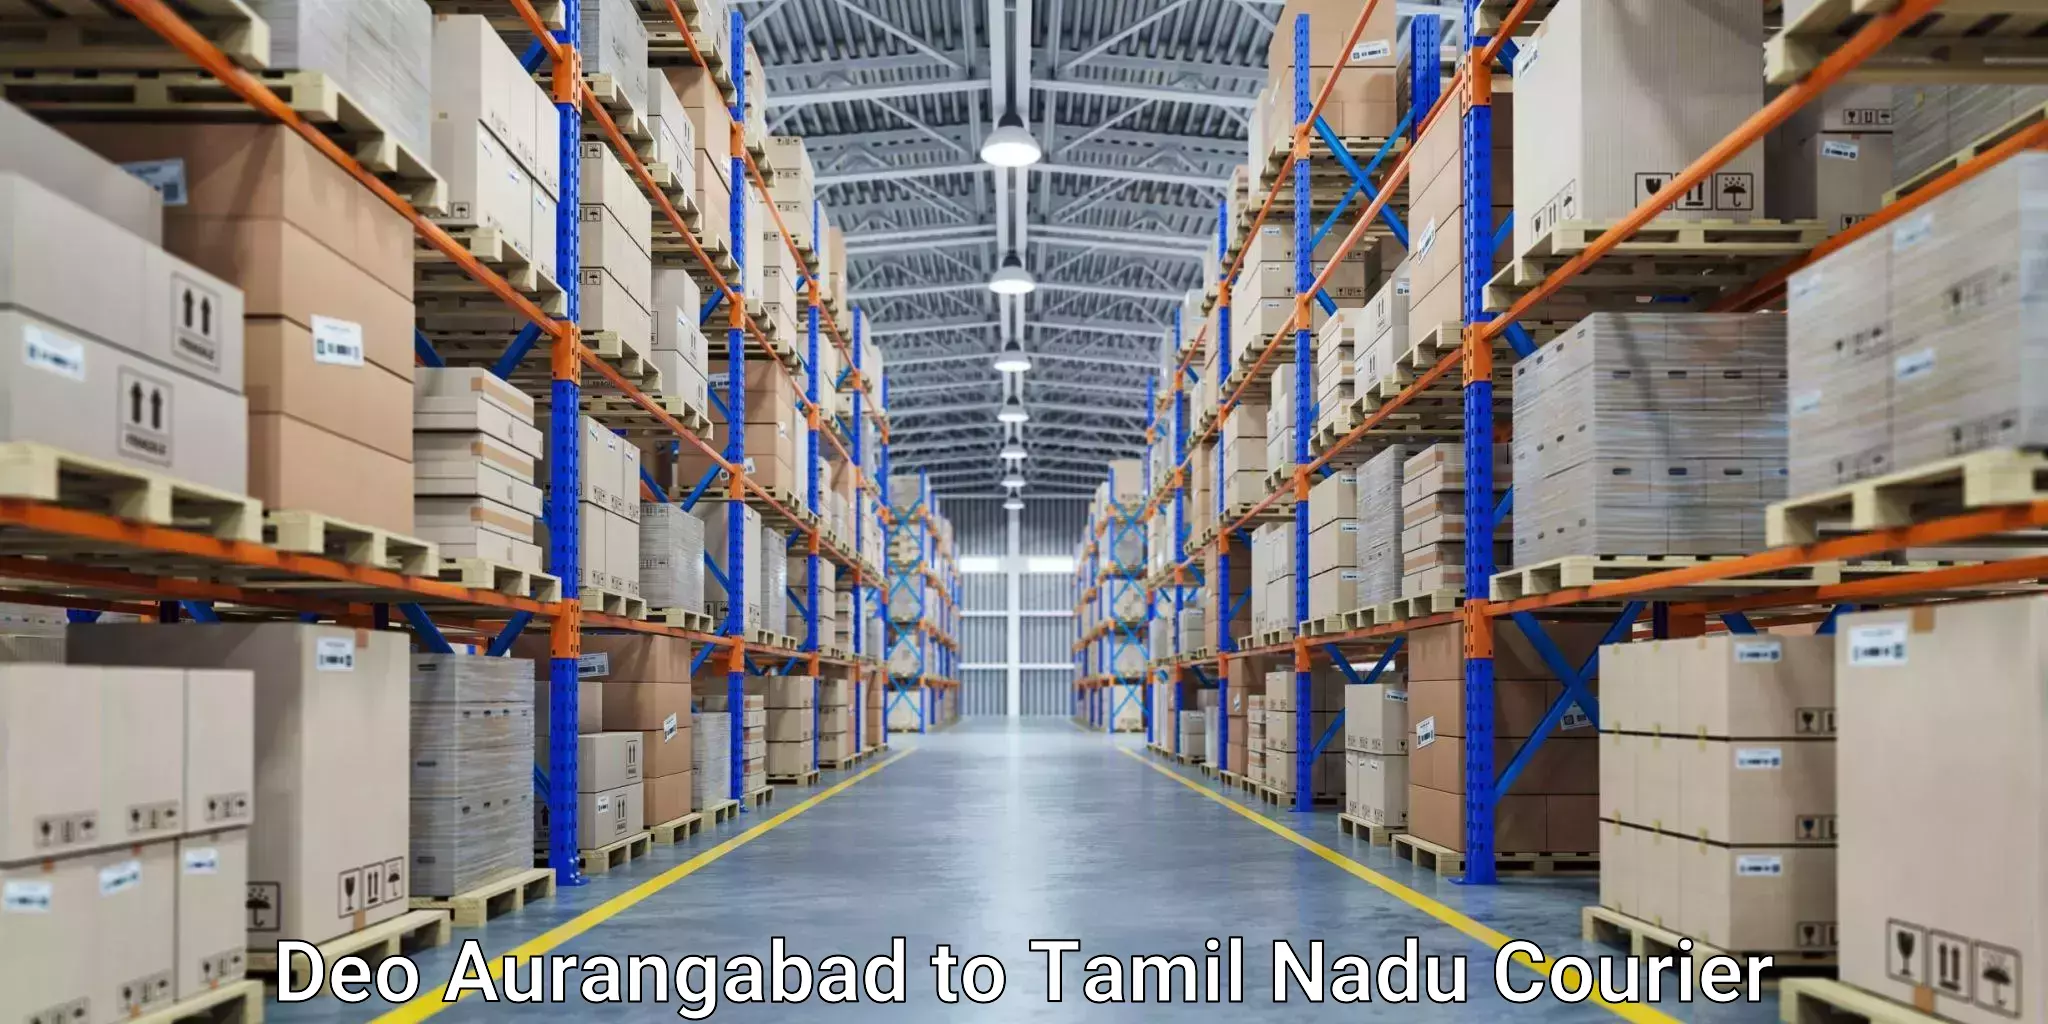 24-hour courier service Deo Aurangabad to Tamil Nadu